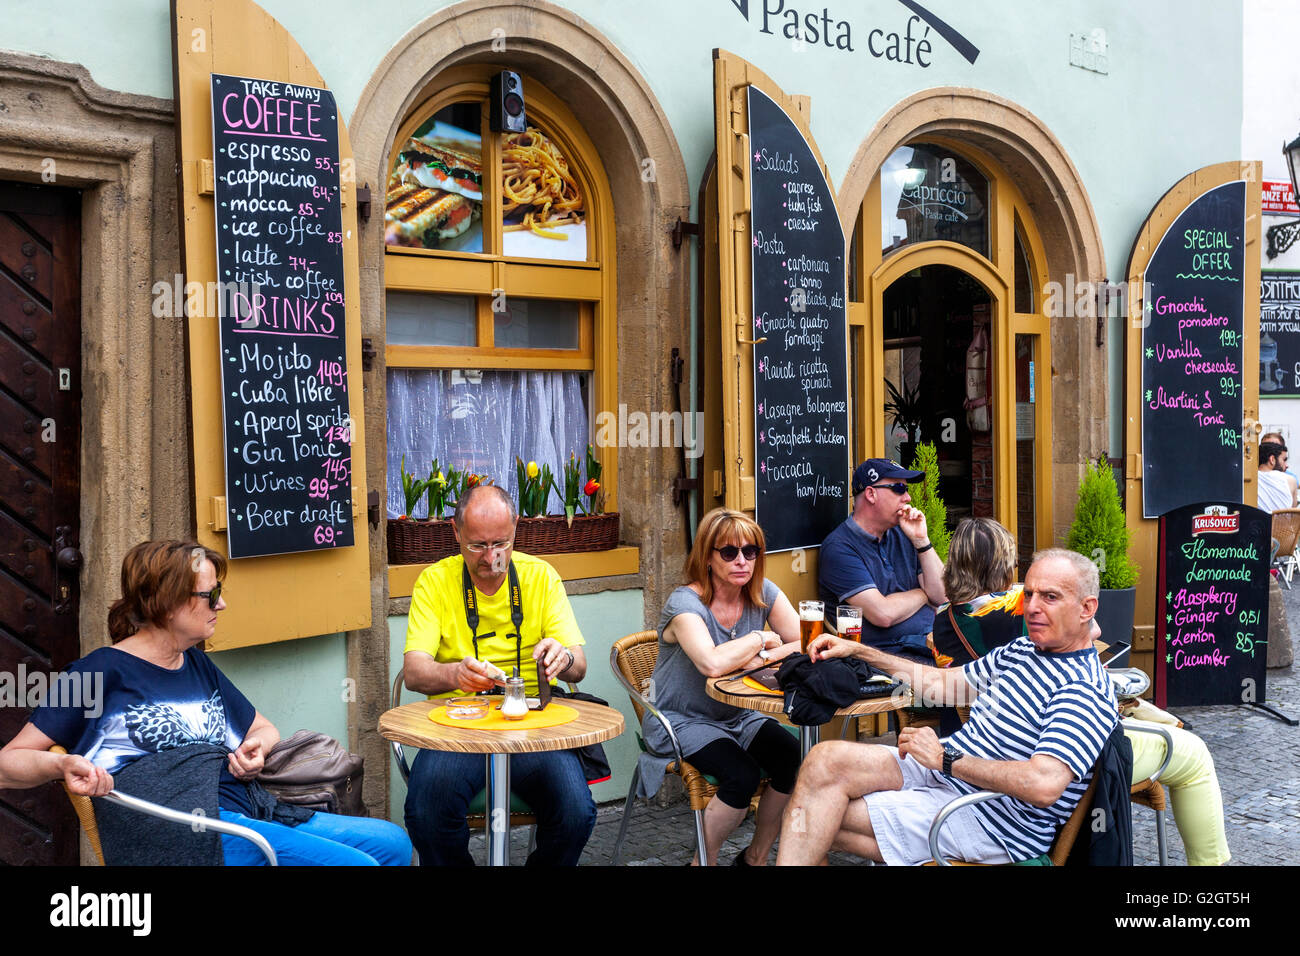 CAFE-CAFE, Prague - Stare Mesto (Old Town) - Menu, Prices